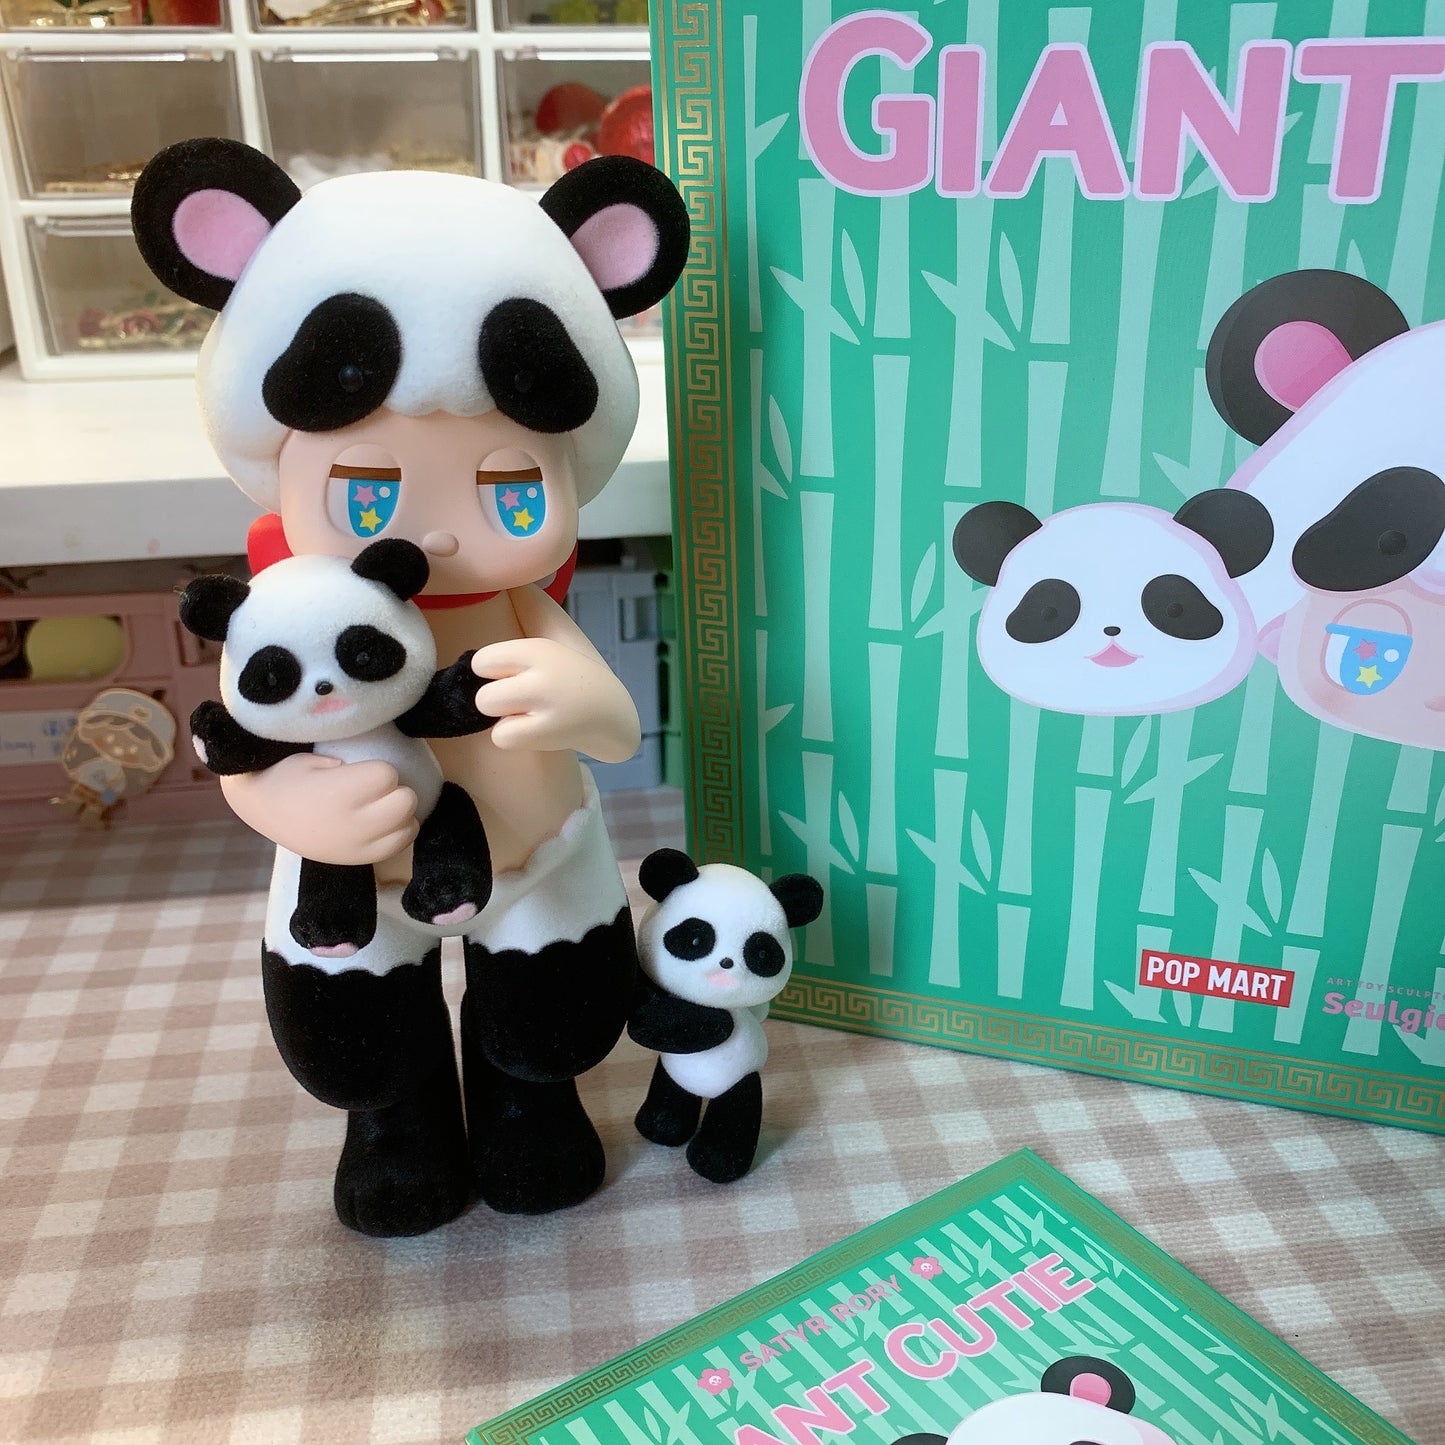 POP MART Satry rory giant cutie Panda baby figurine/toy